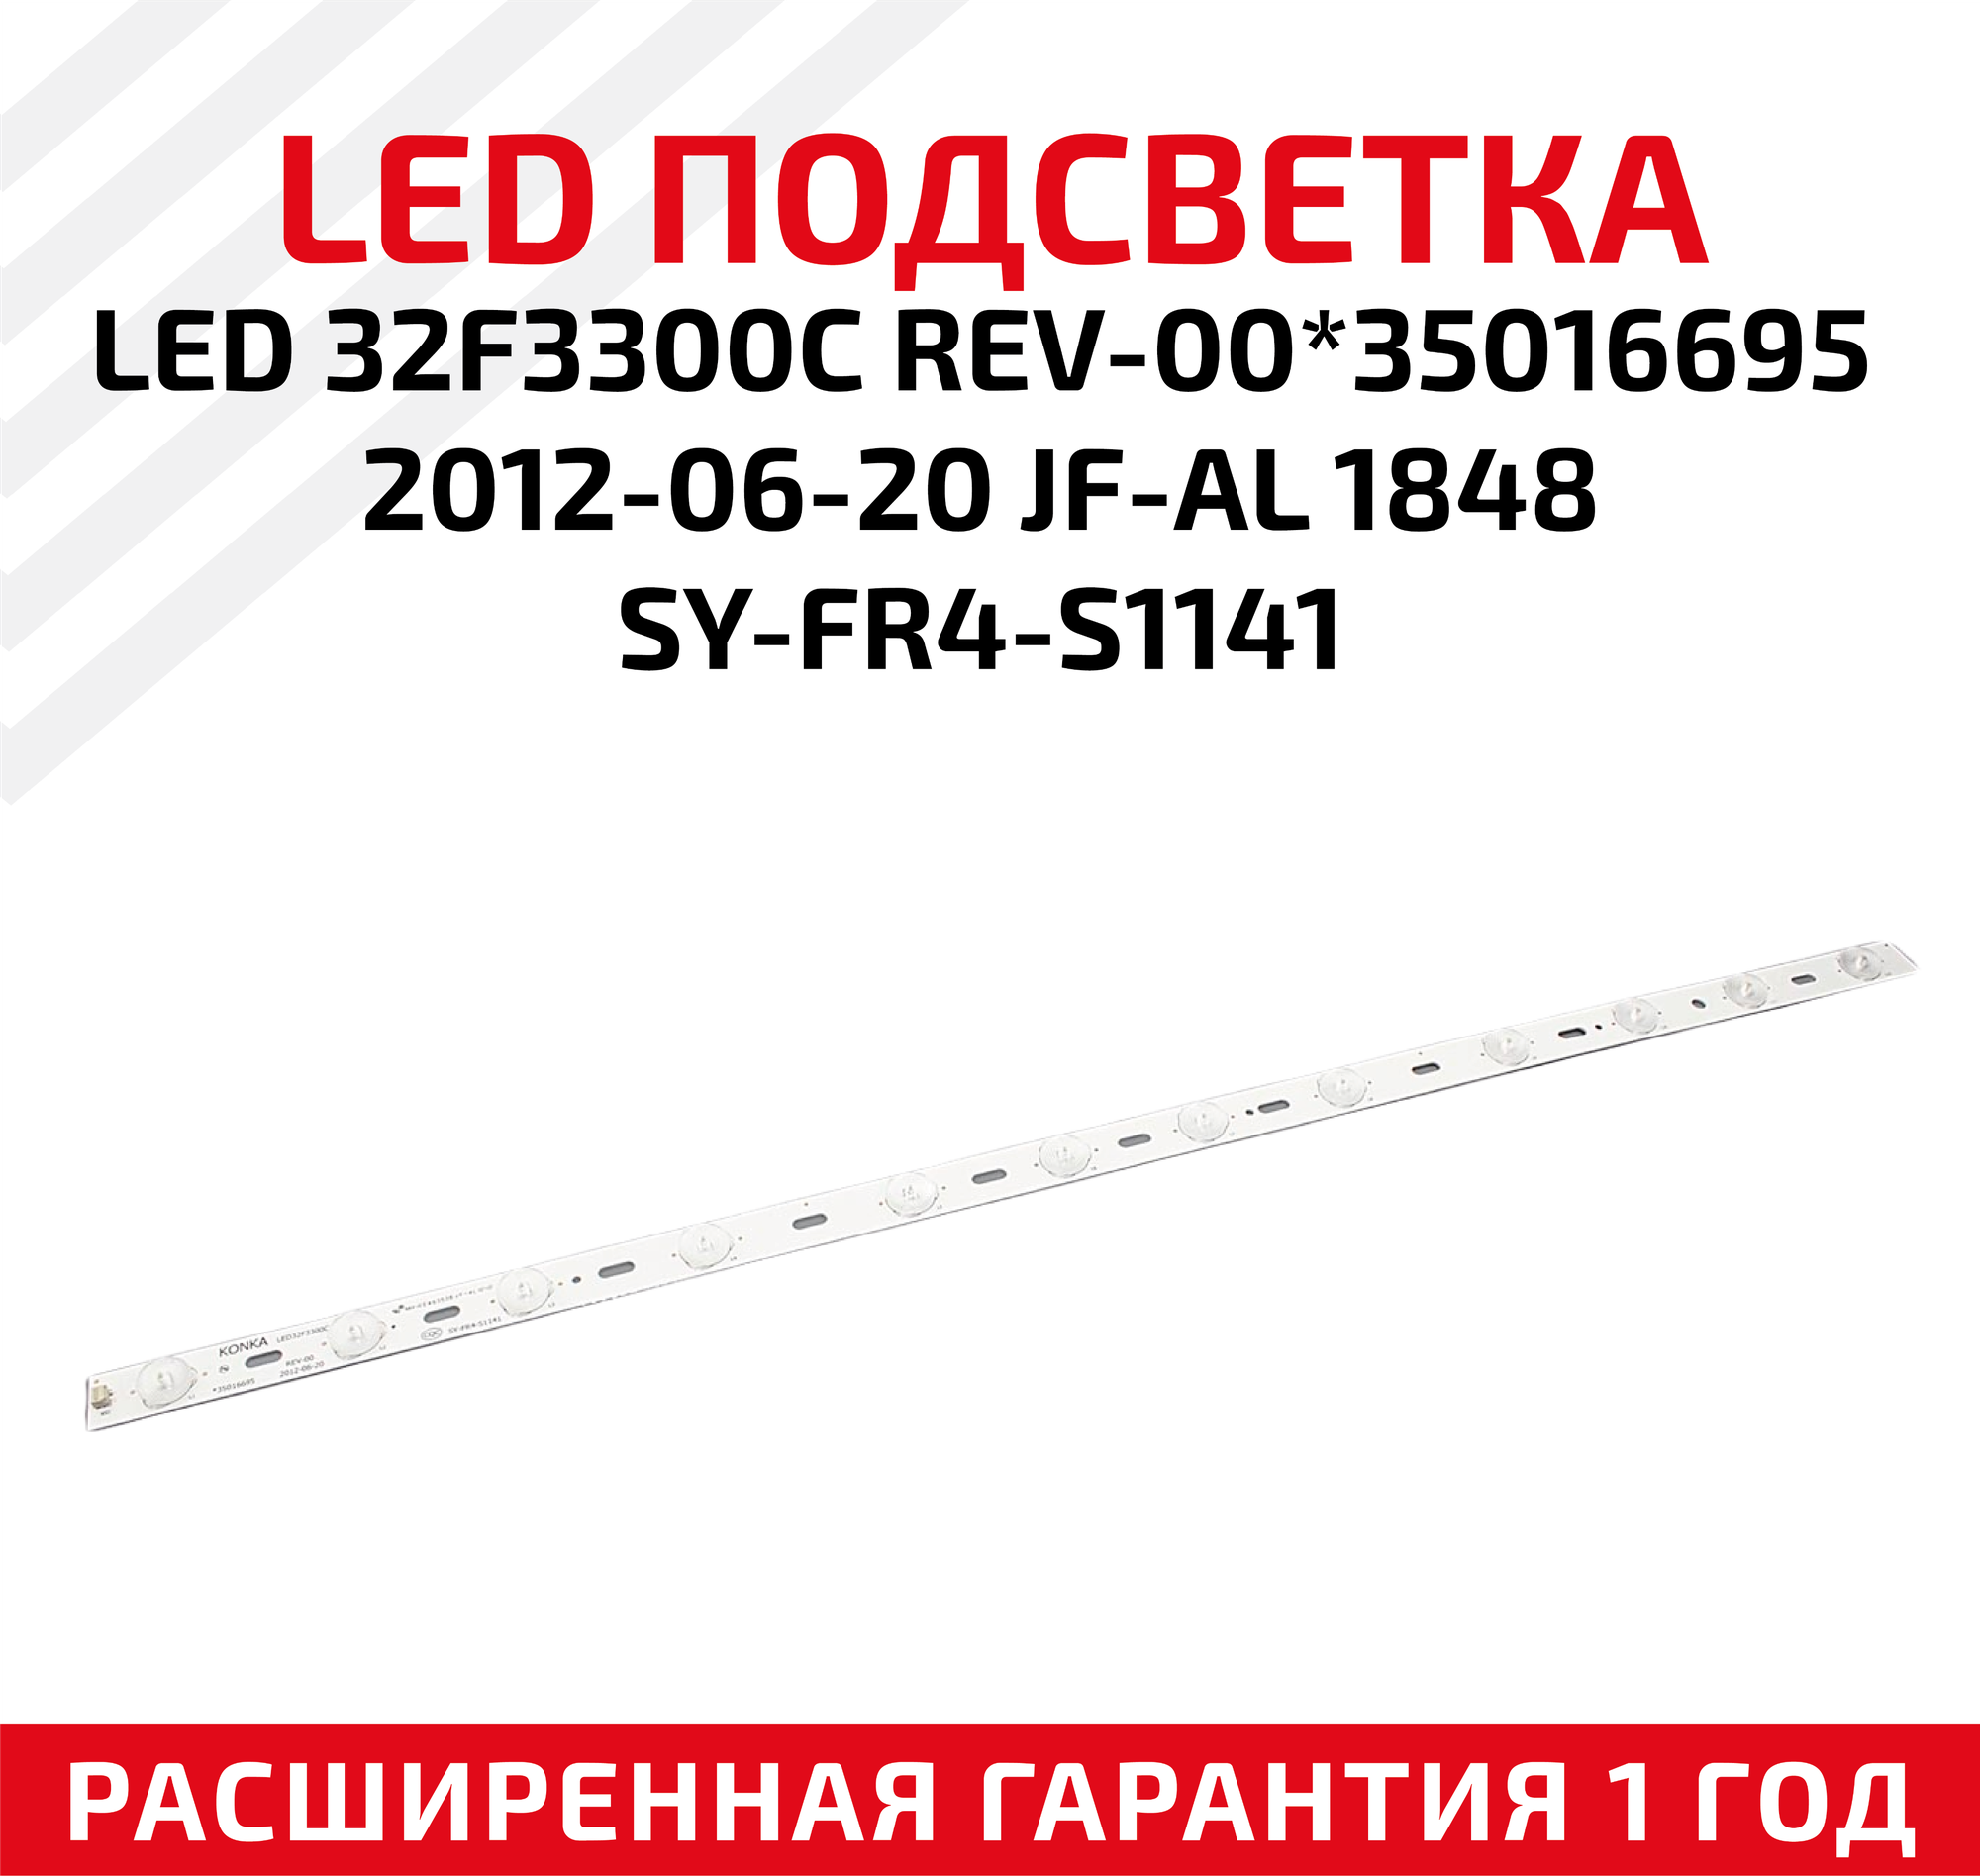 LED подсветка (светодиодная планка) для телевизора LED 32F3300C REV-00*35016695 2012-06-20 JF-AL 1848 SY-FR4-S1141